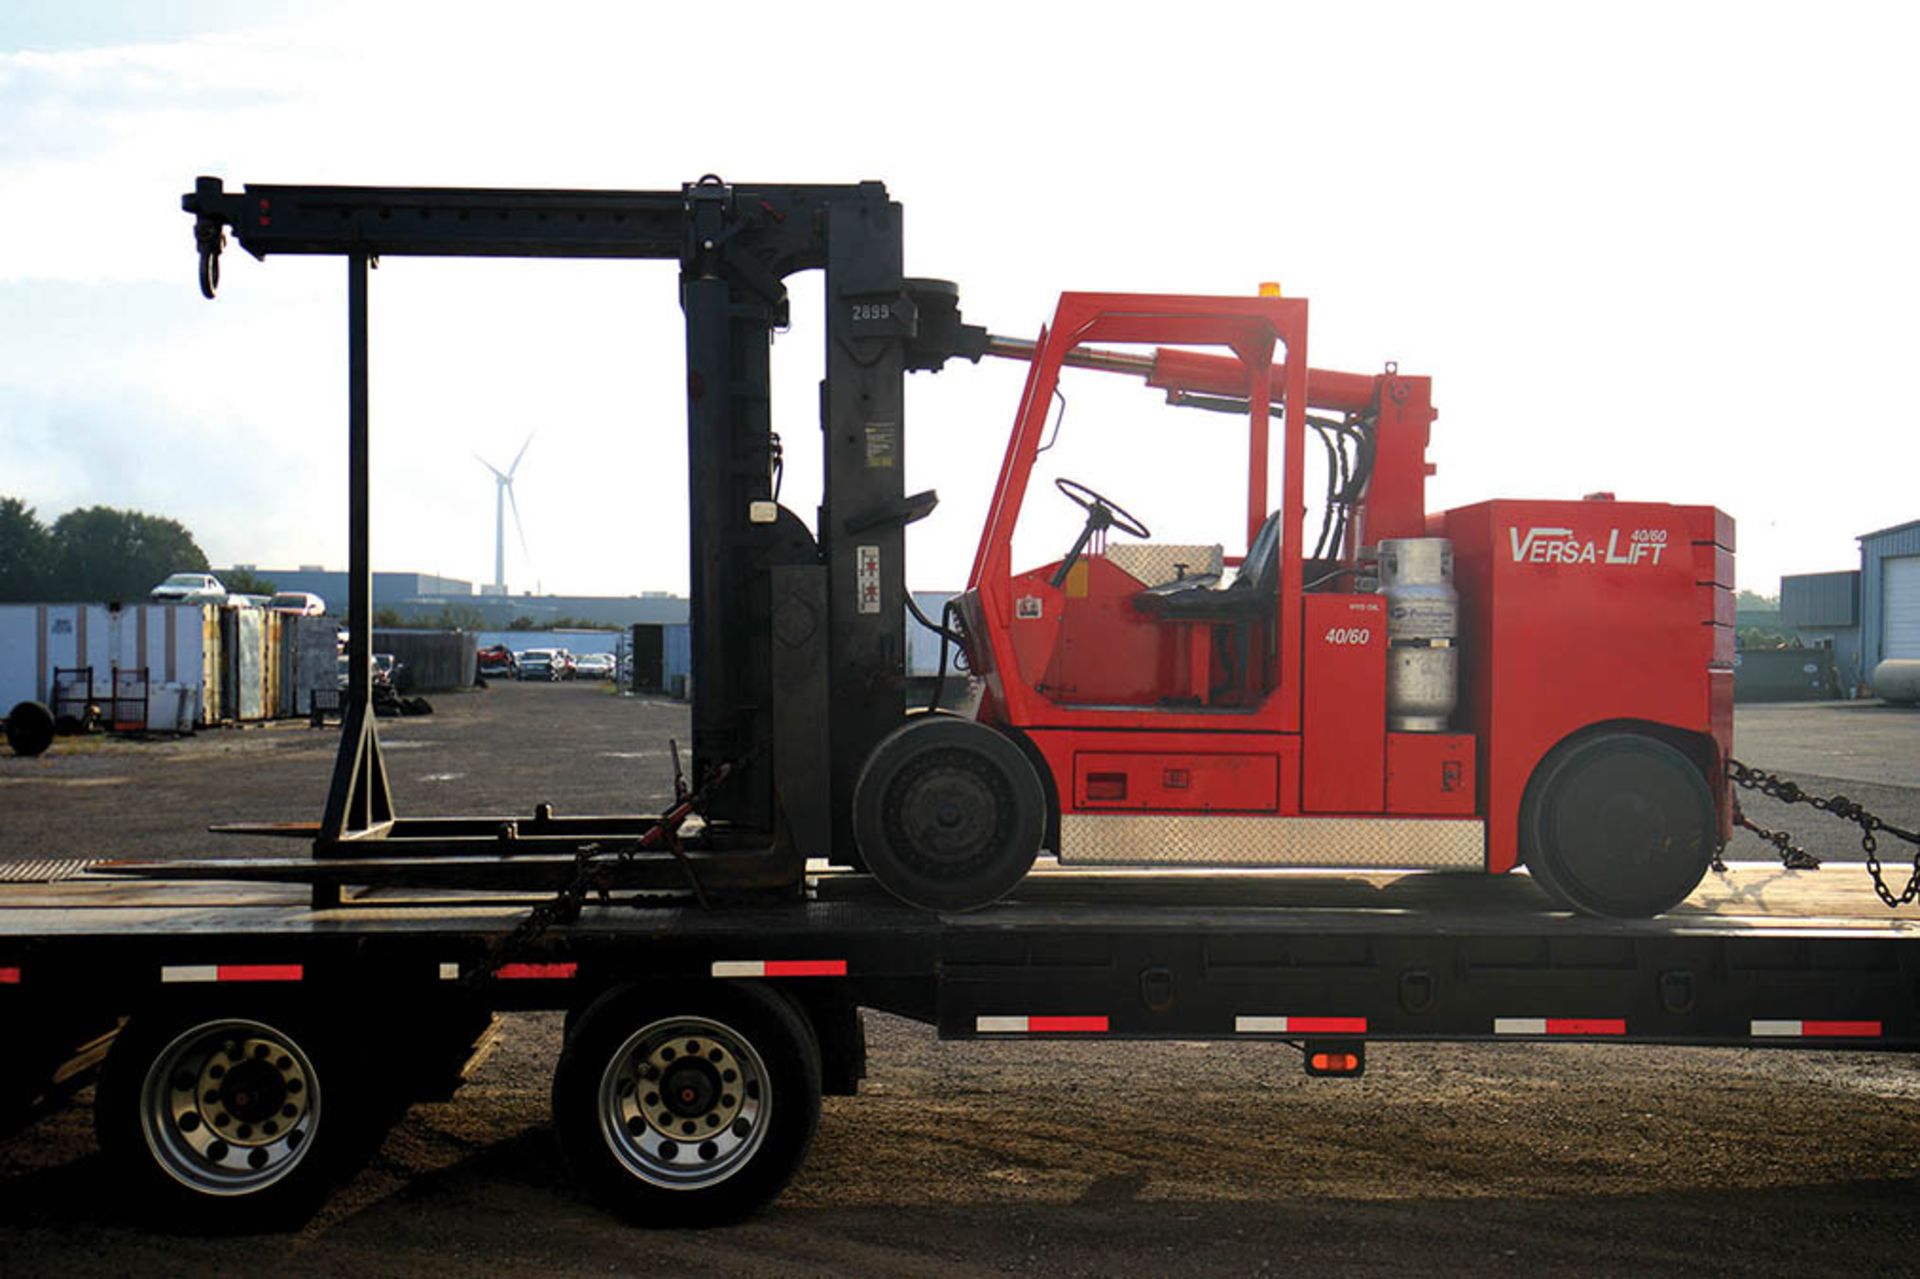 2010 VERSA-LIFT 40/60 Forklift, 60,000-lb. Capacity - Image 12 of 17